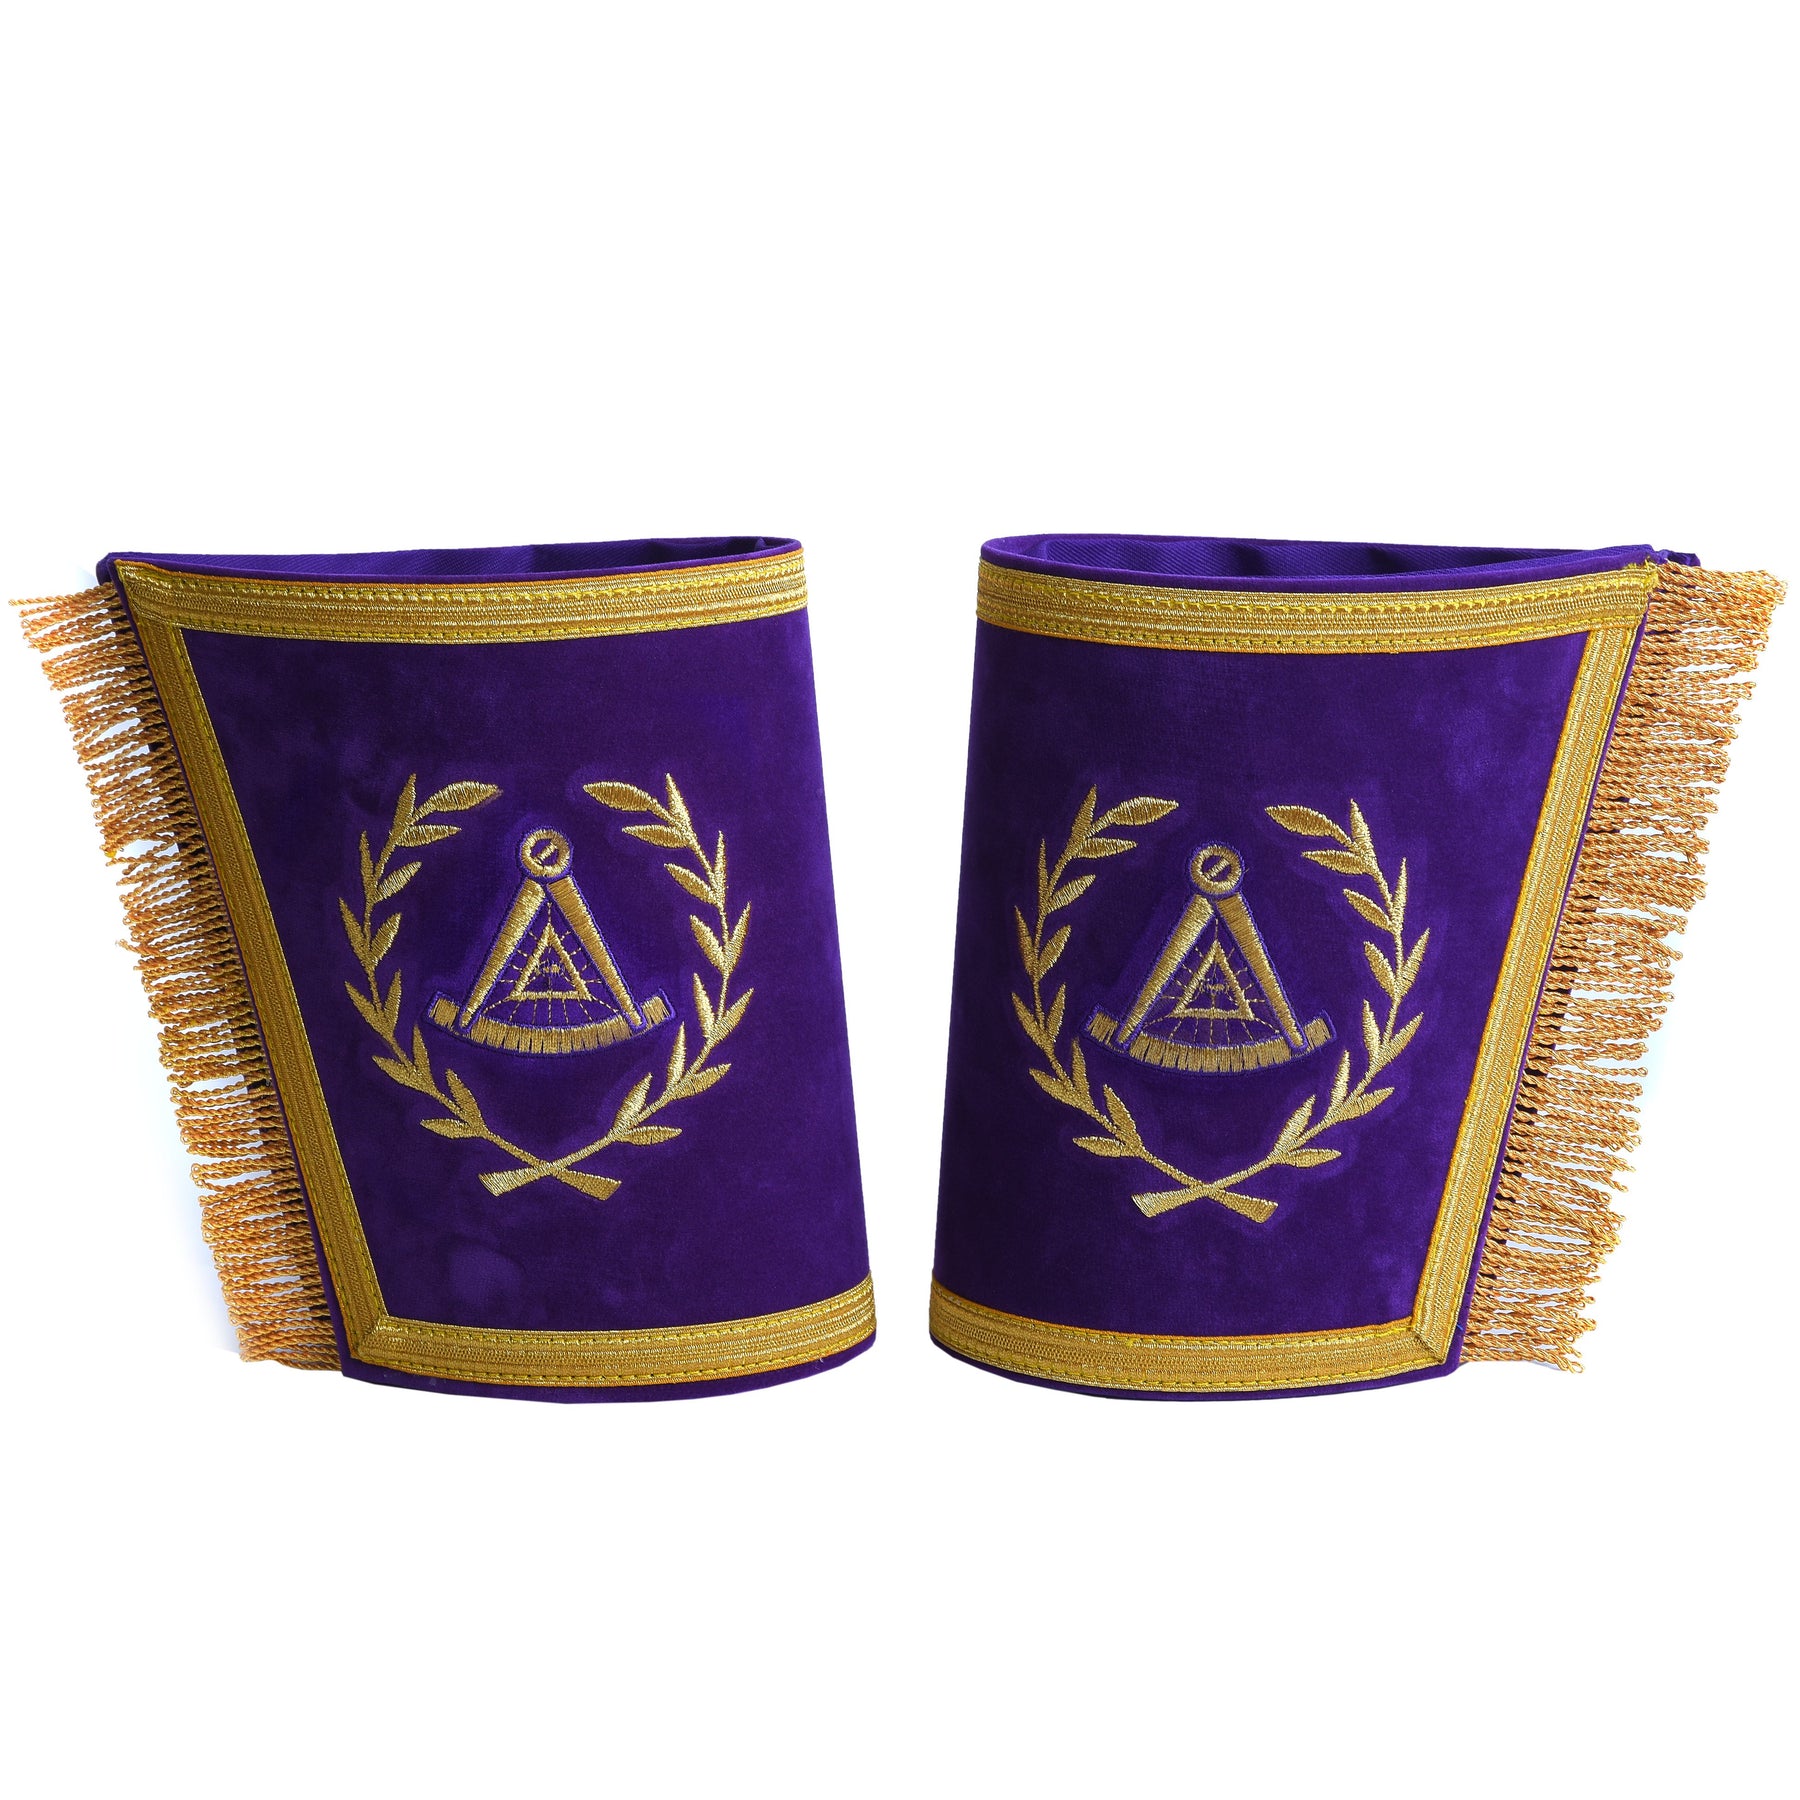 Grand Master Blue Lodge Cuff - Purple Hand Embroidery With Fringe - Bricks Masons